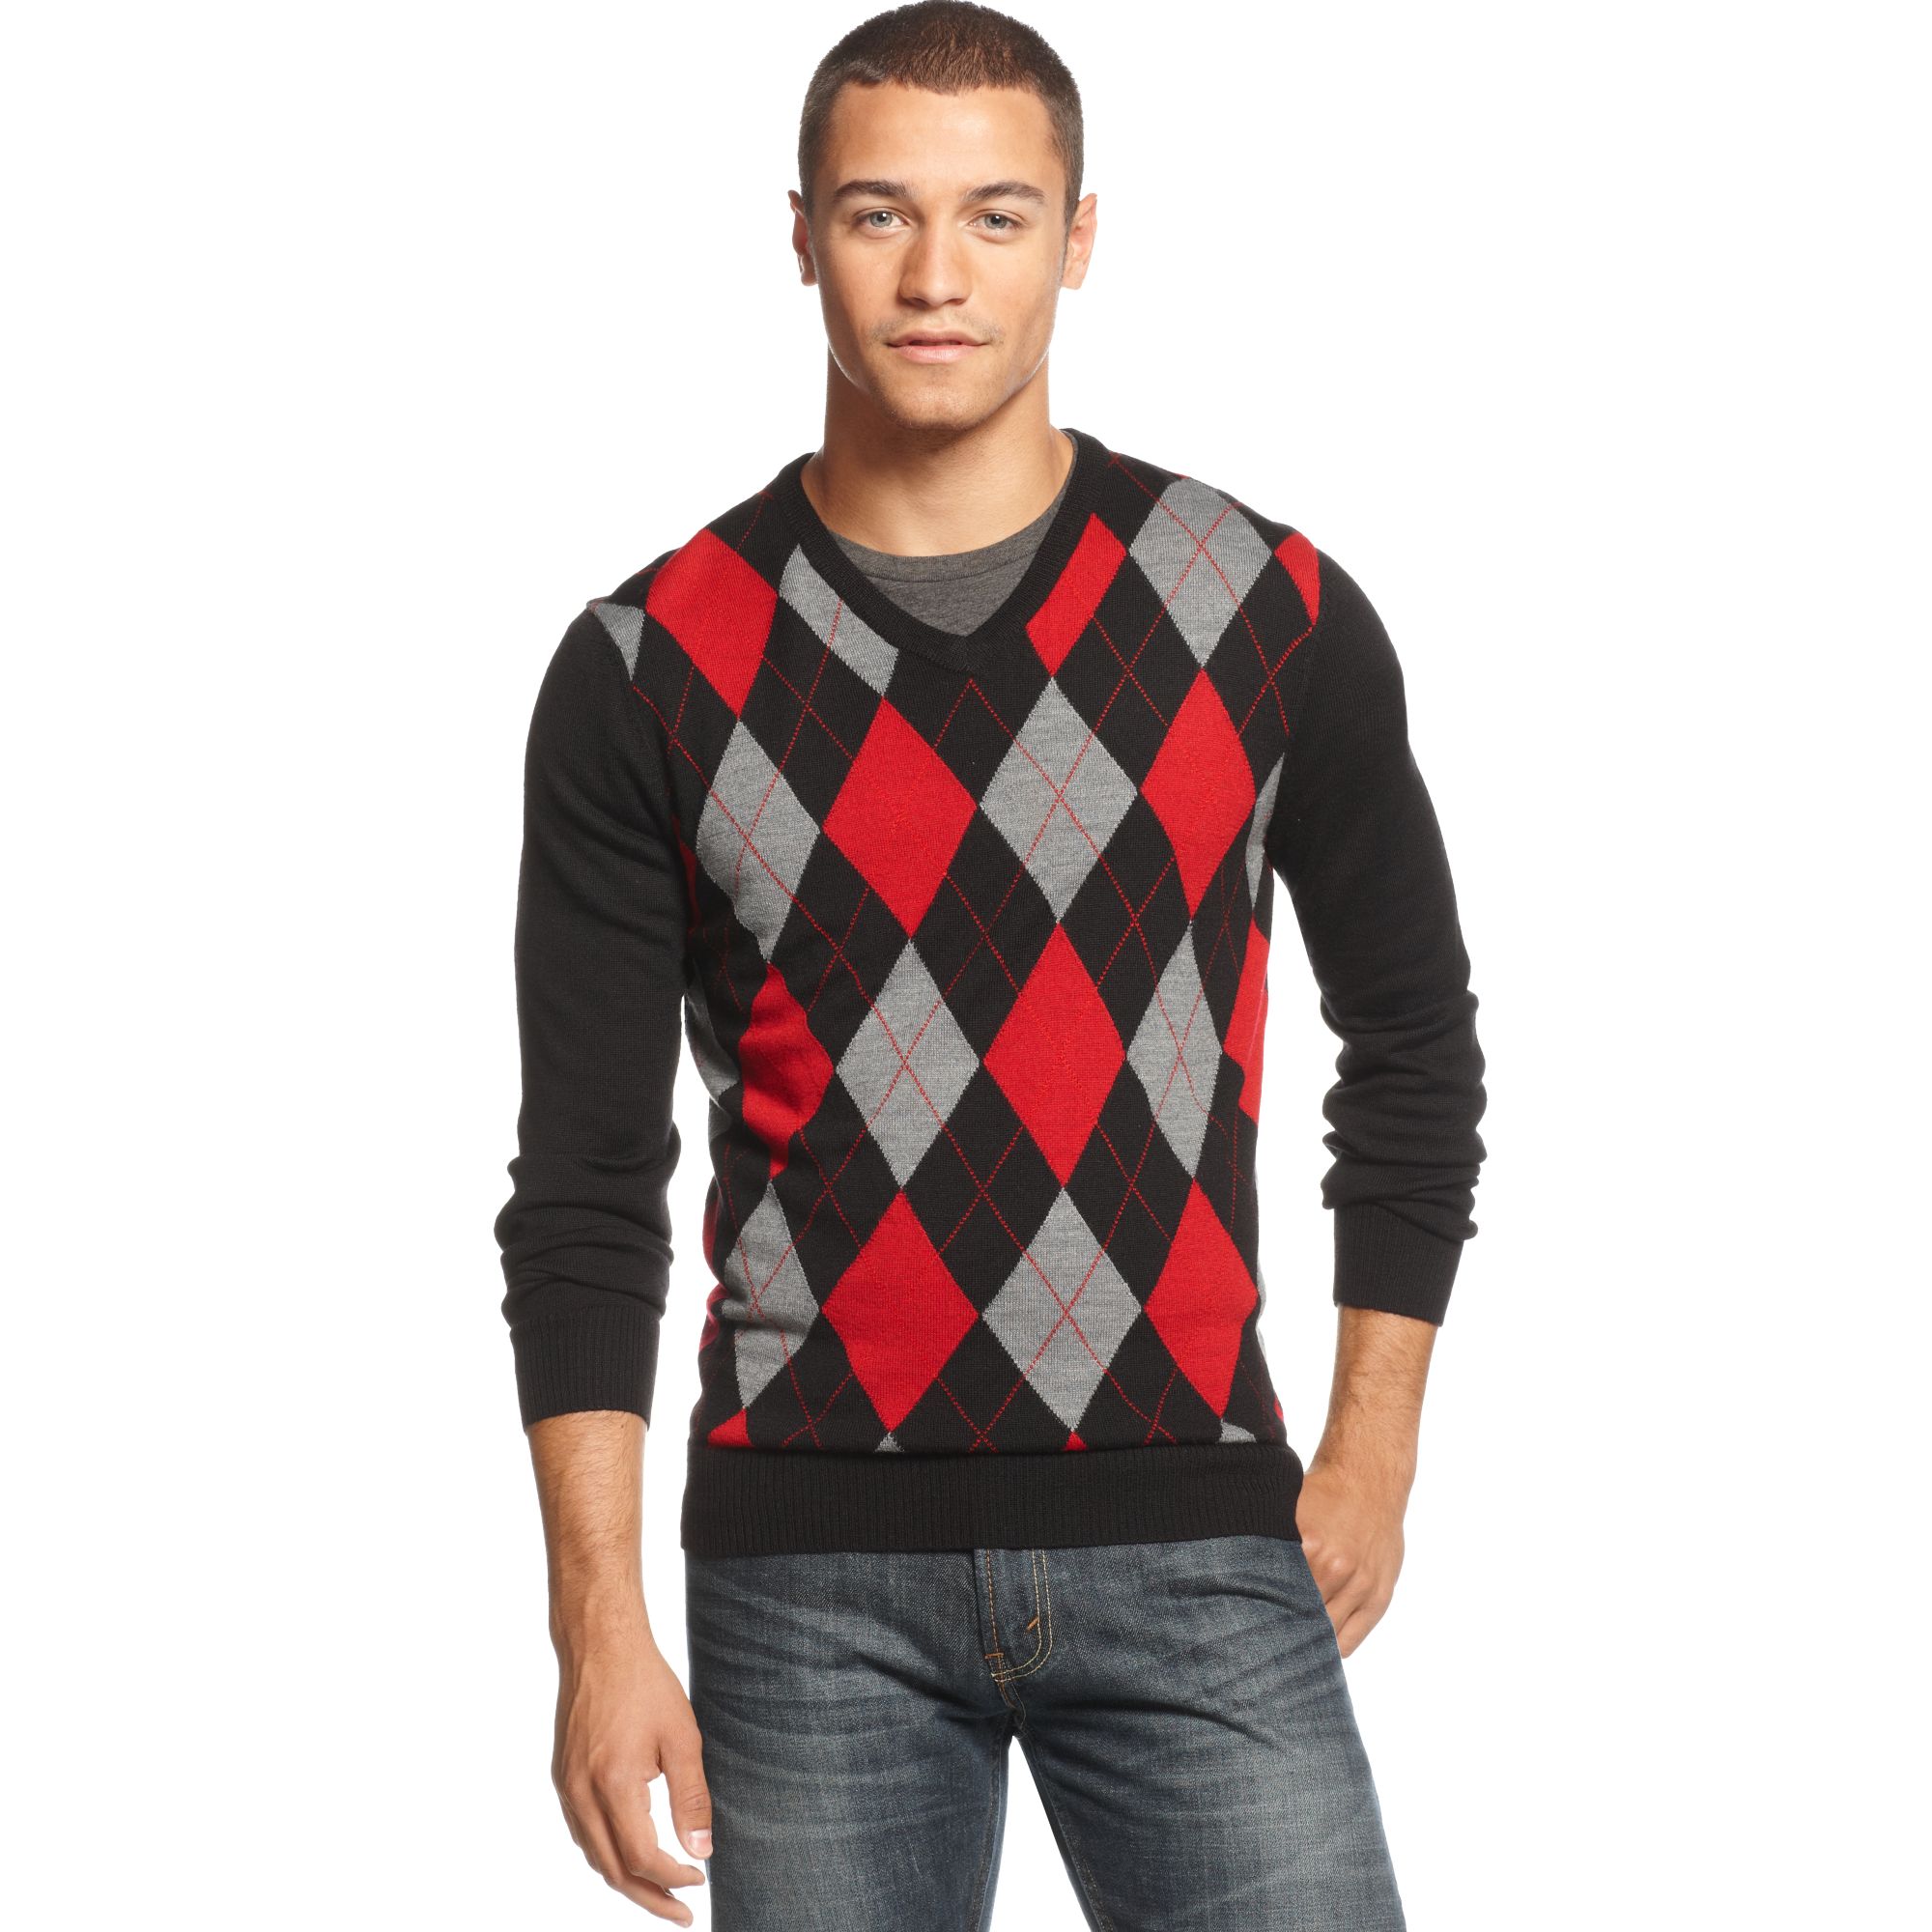 Lyst - Inc international concepts Halpert Argyle Sweater in Red for Men